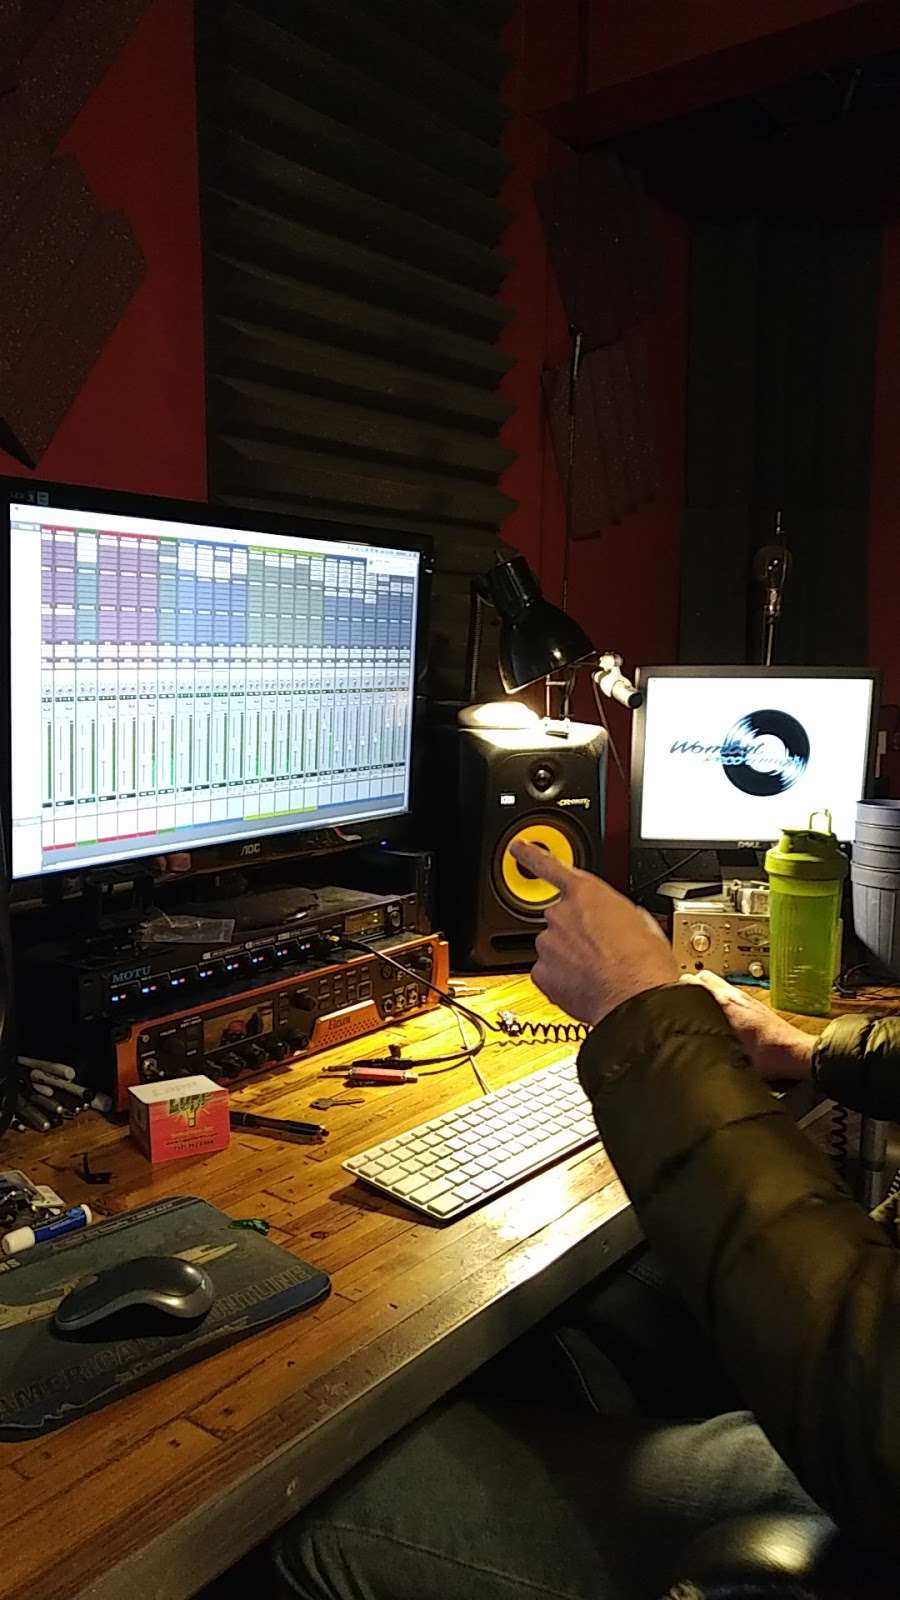 Wombat Recording Studio | 217 Brenneman Rd, Lancaster, PA 17603, USA | Phone: (717) 682-5175